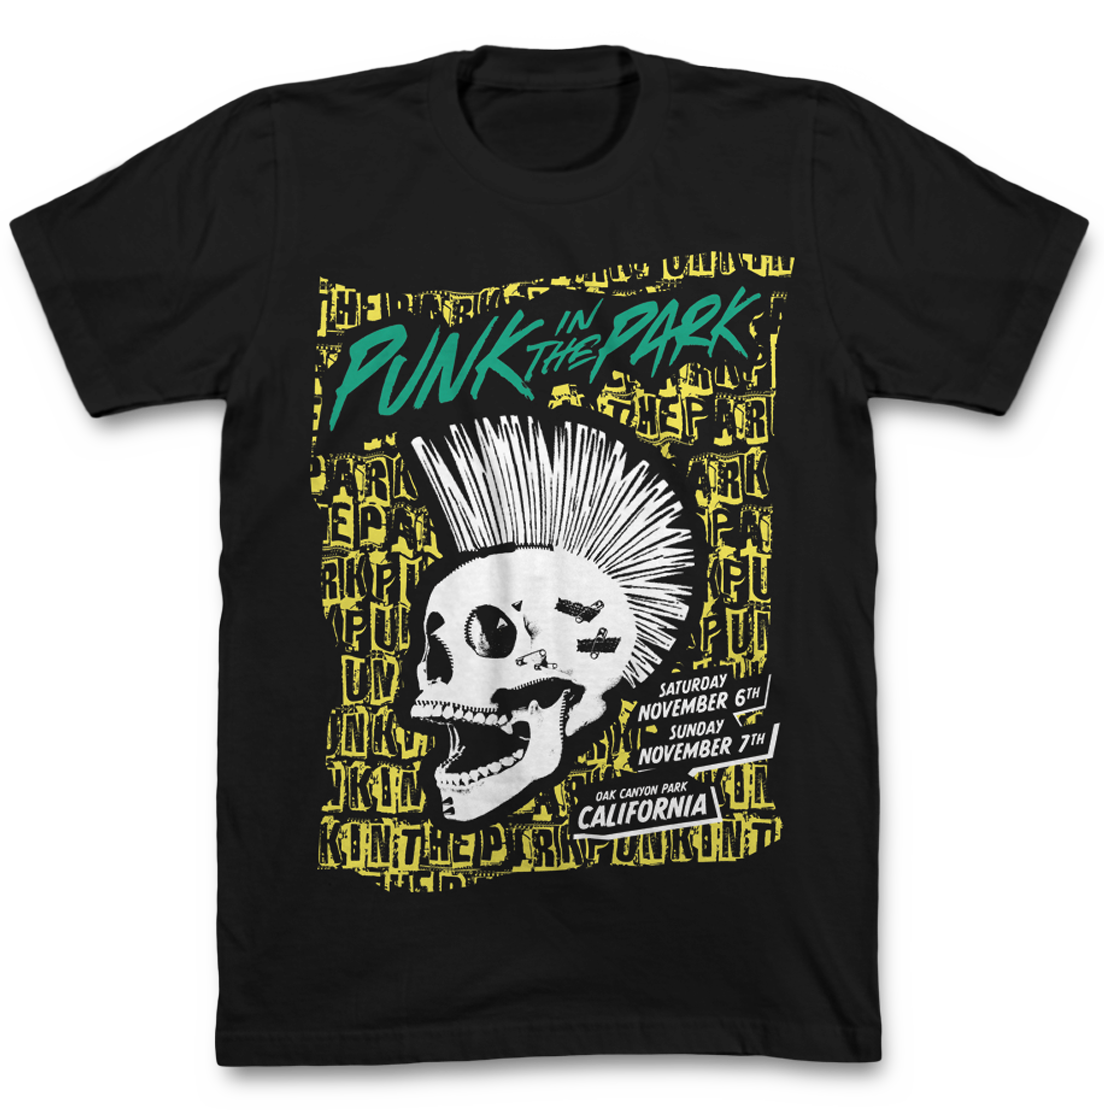 Punk In The Park - OC 21 | Short Sleeve Shirt